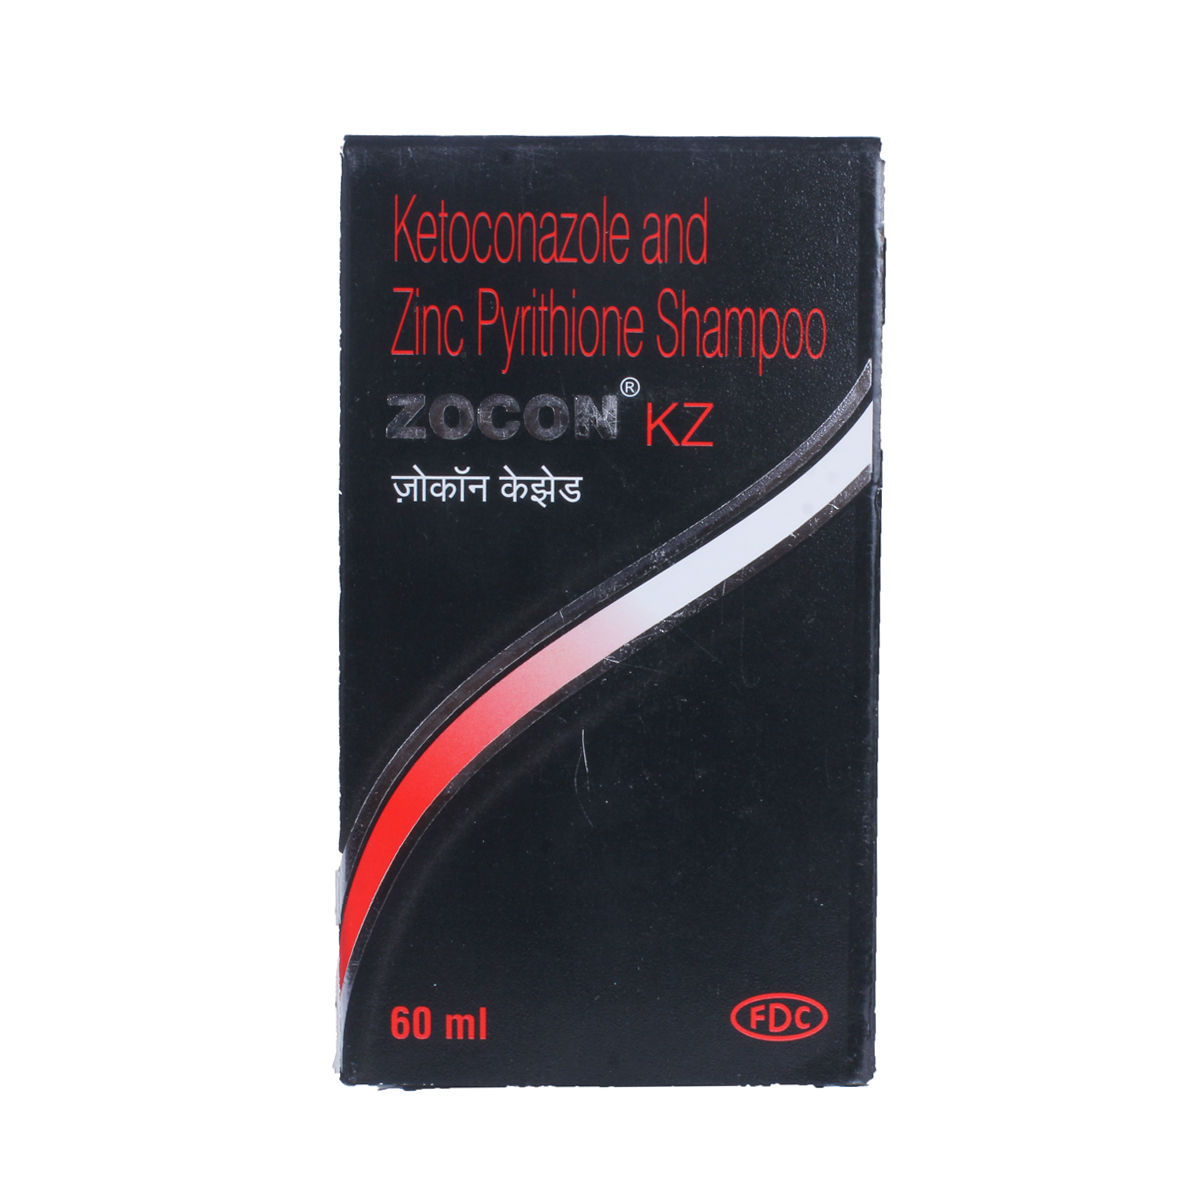 Zocon KZ Shampoo 60 ml, Pack of 1 SHAMPOO